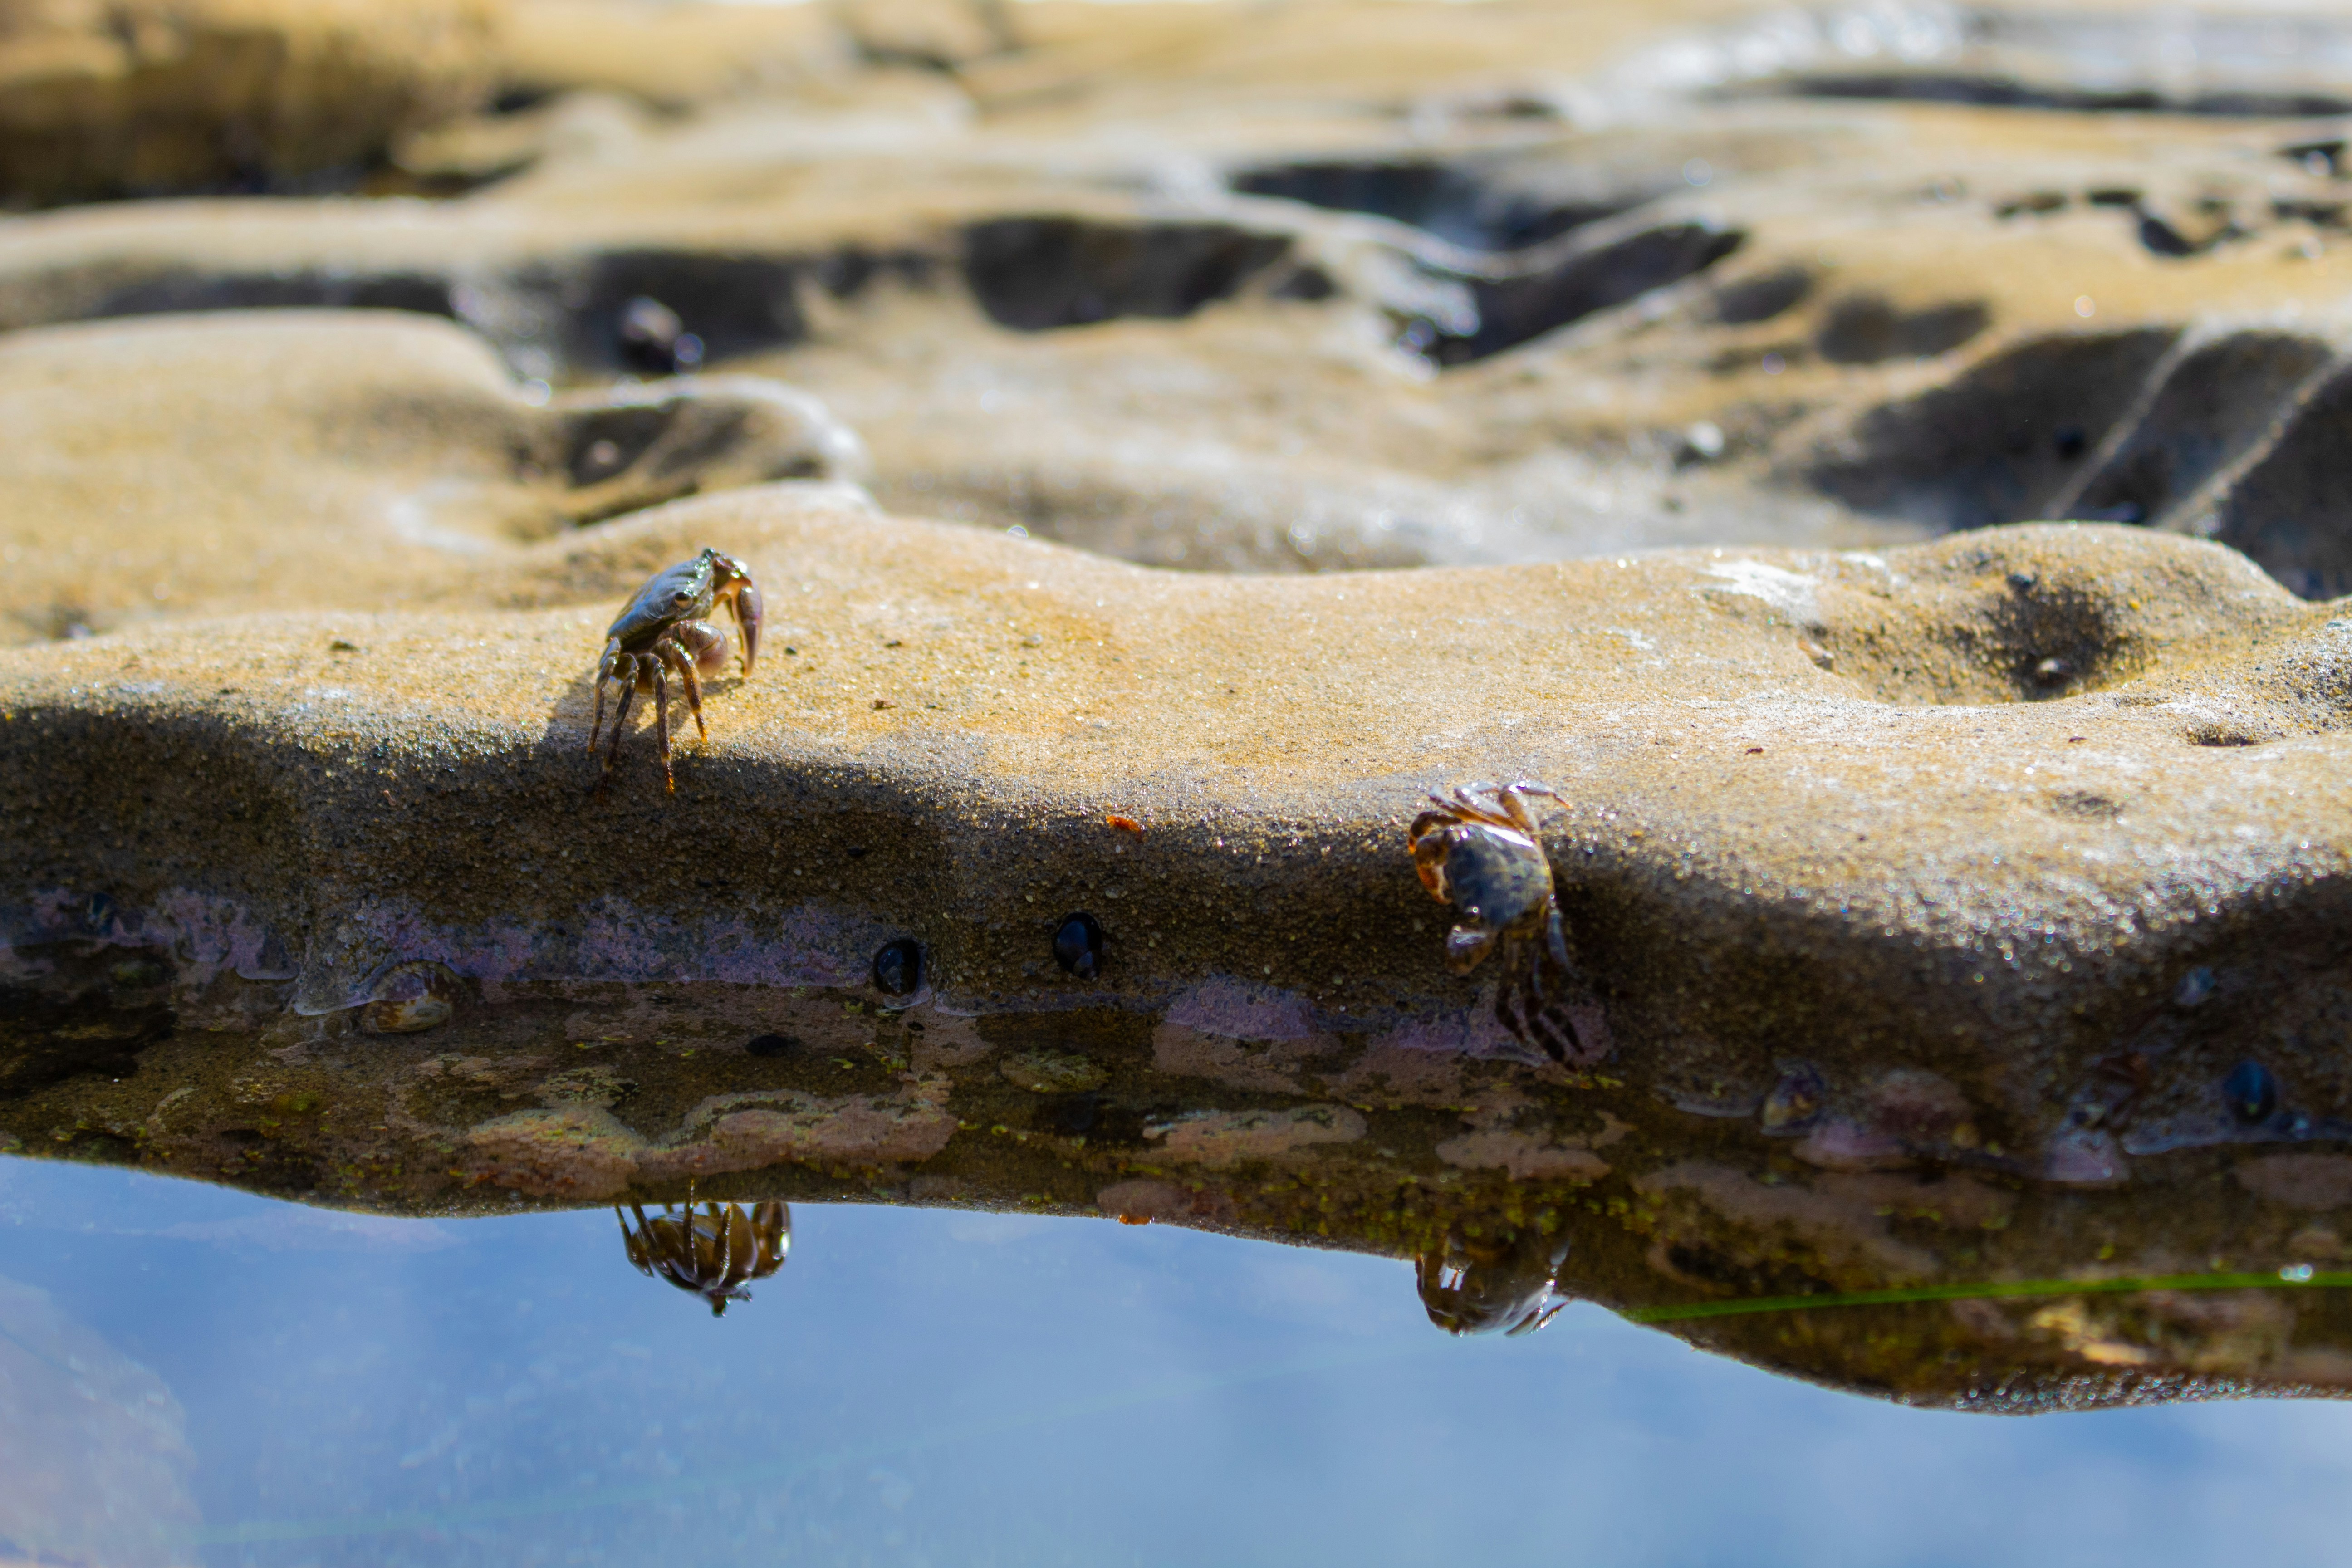 Crabs enjoying the sun in one of La Jolla's many tidepools.